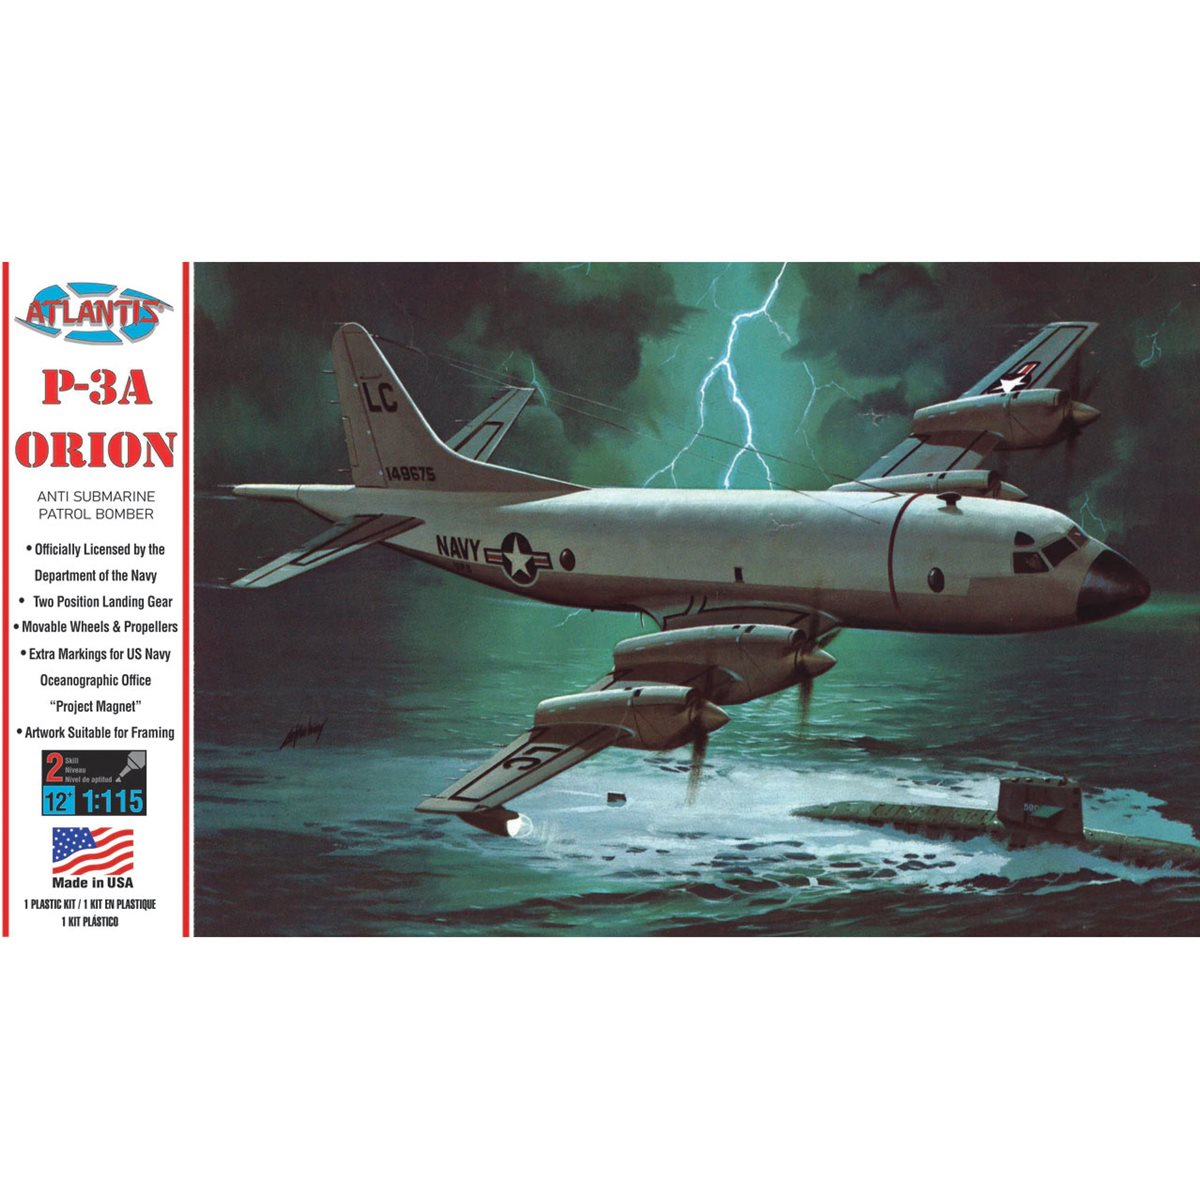 US Navy Lockheed P-3A Orion Anti-Submarine Patrol Bomber 1:115 Scale  Plastic Model Kit